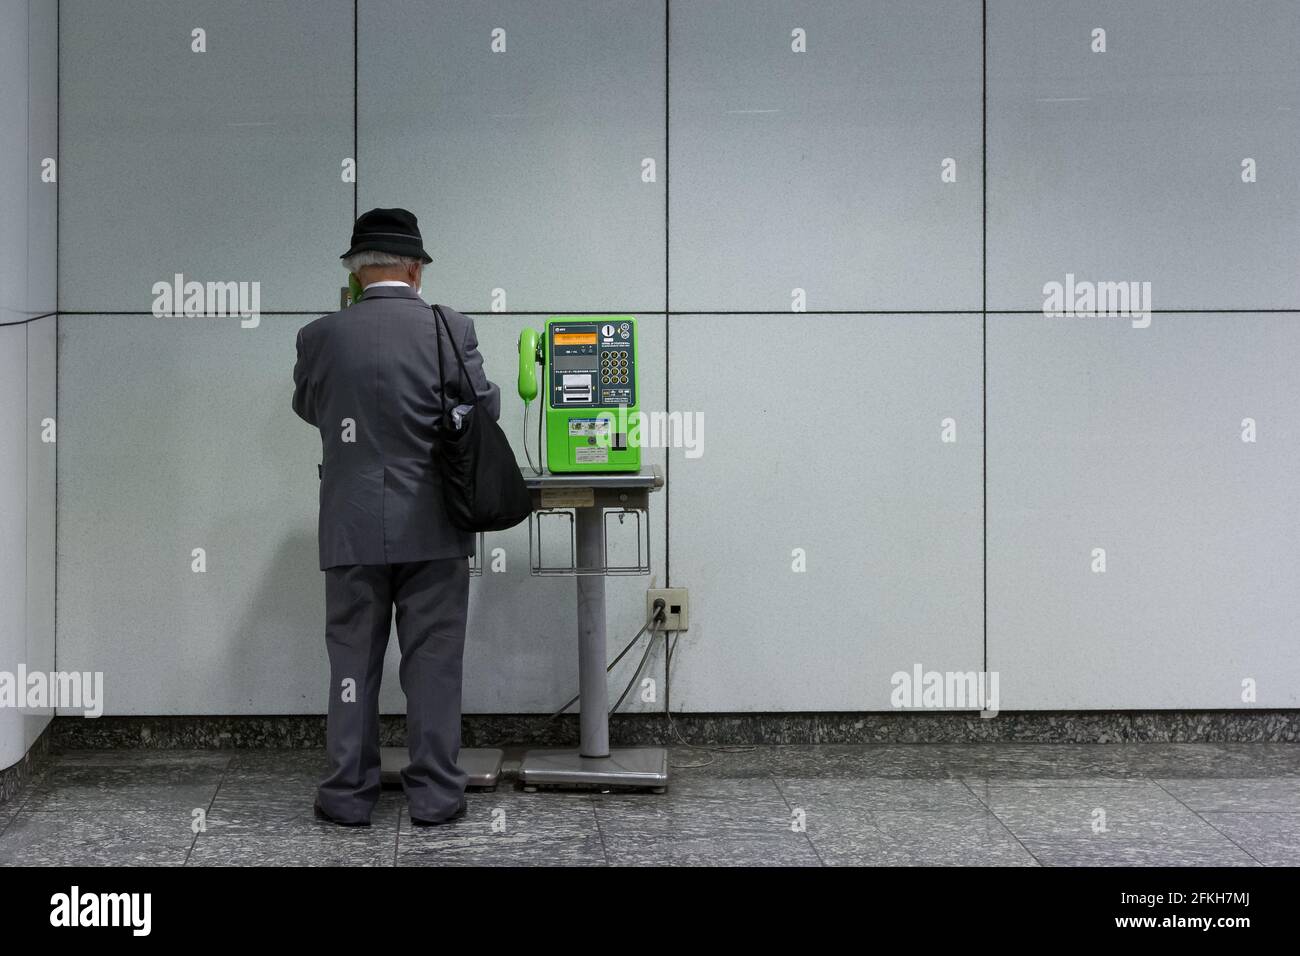 An older Japanese man uses a payphone in Shinjuku Station, Shinjuku, Tokyo, Japan. Stock Photo